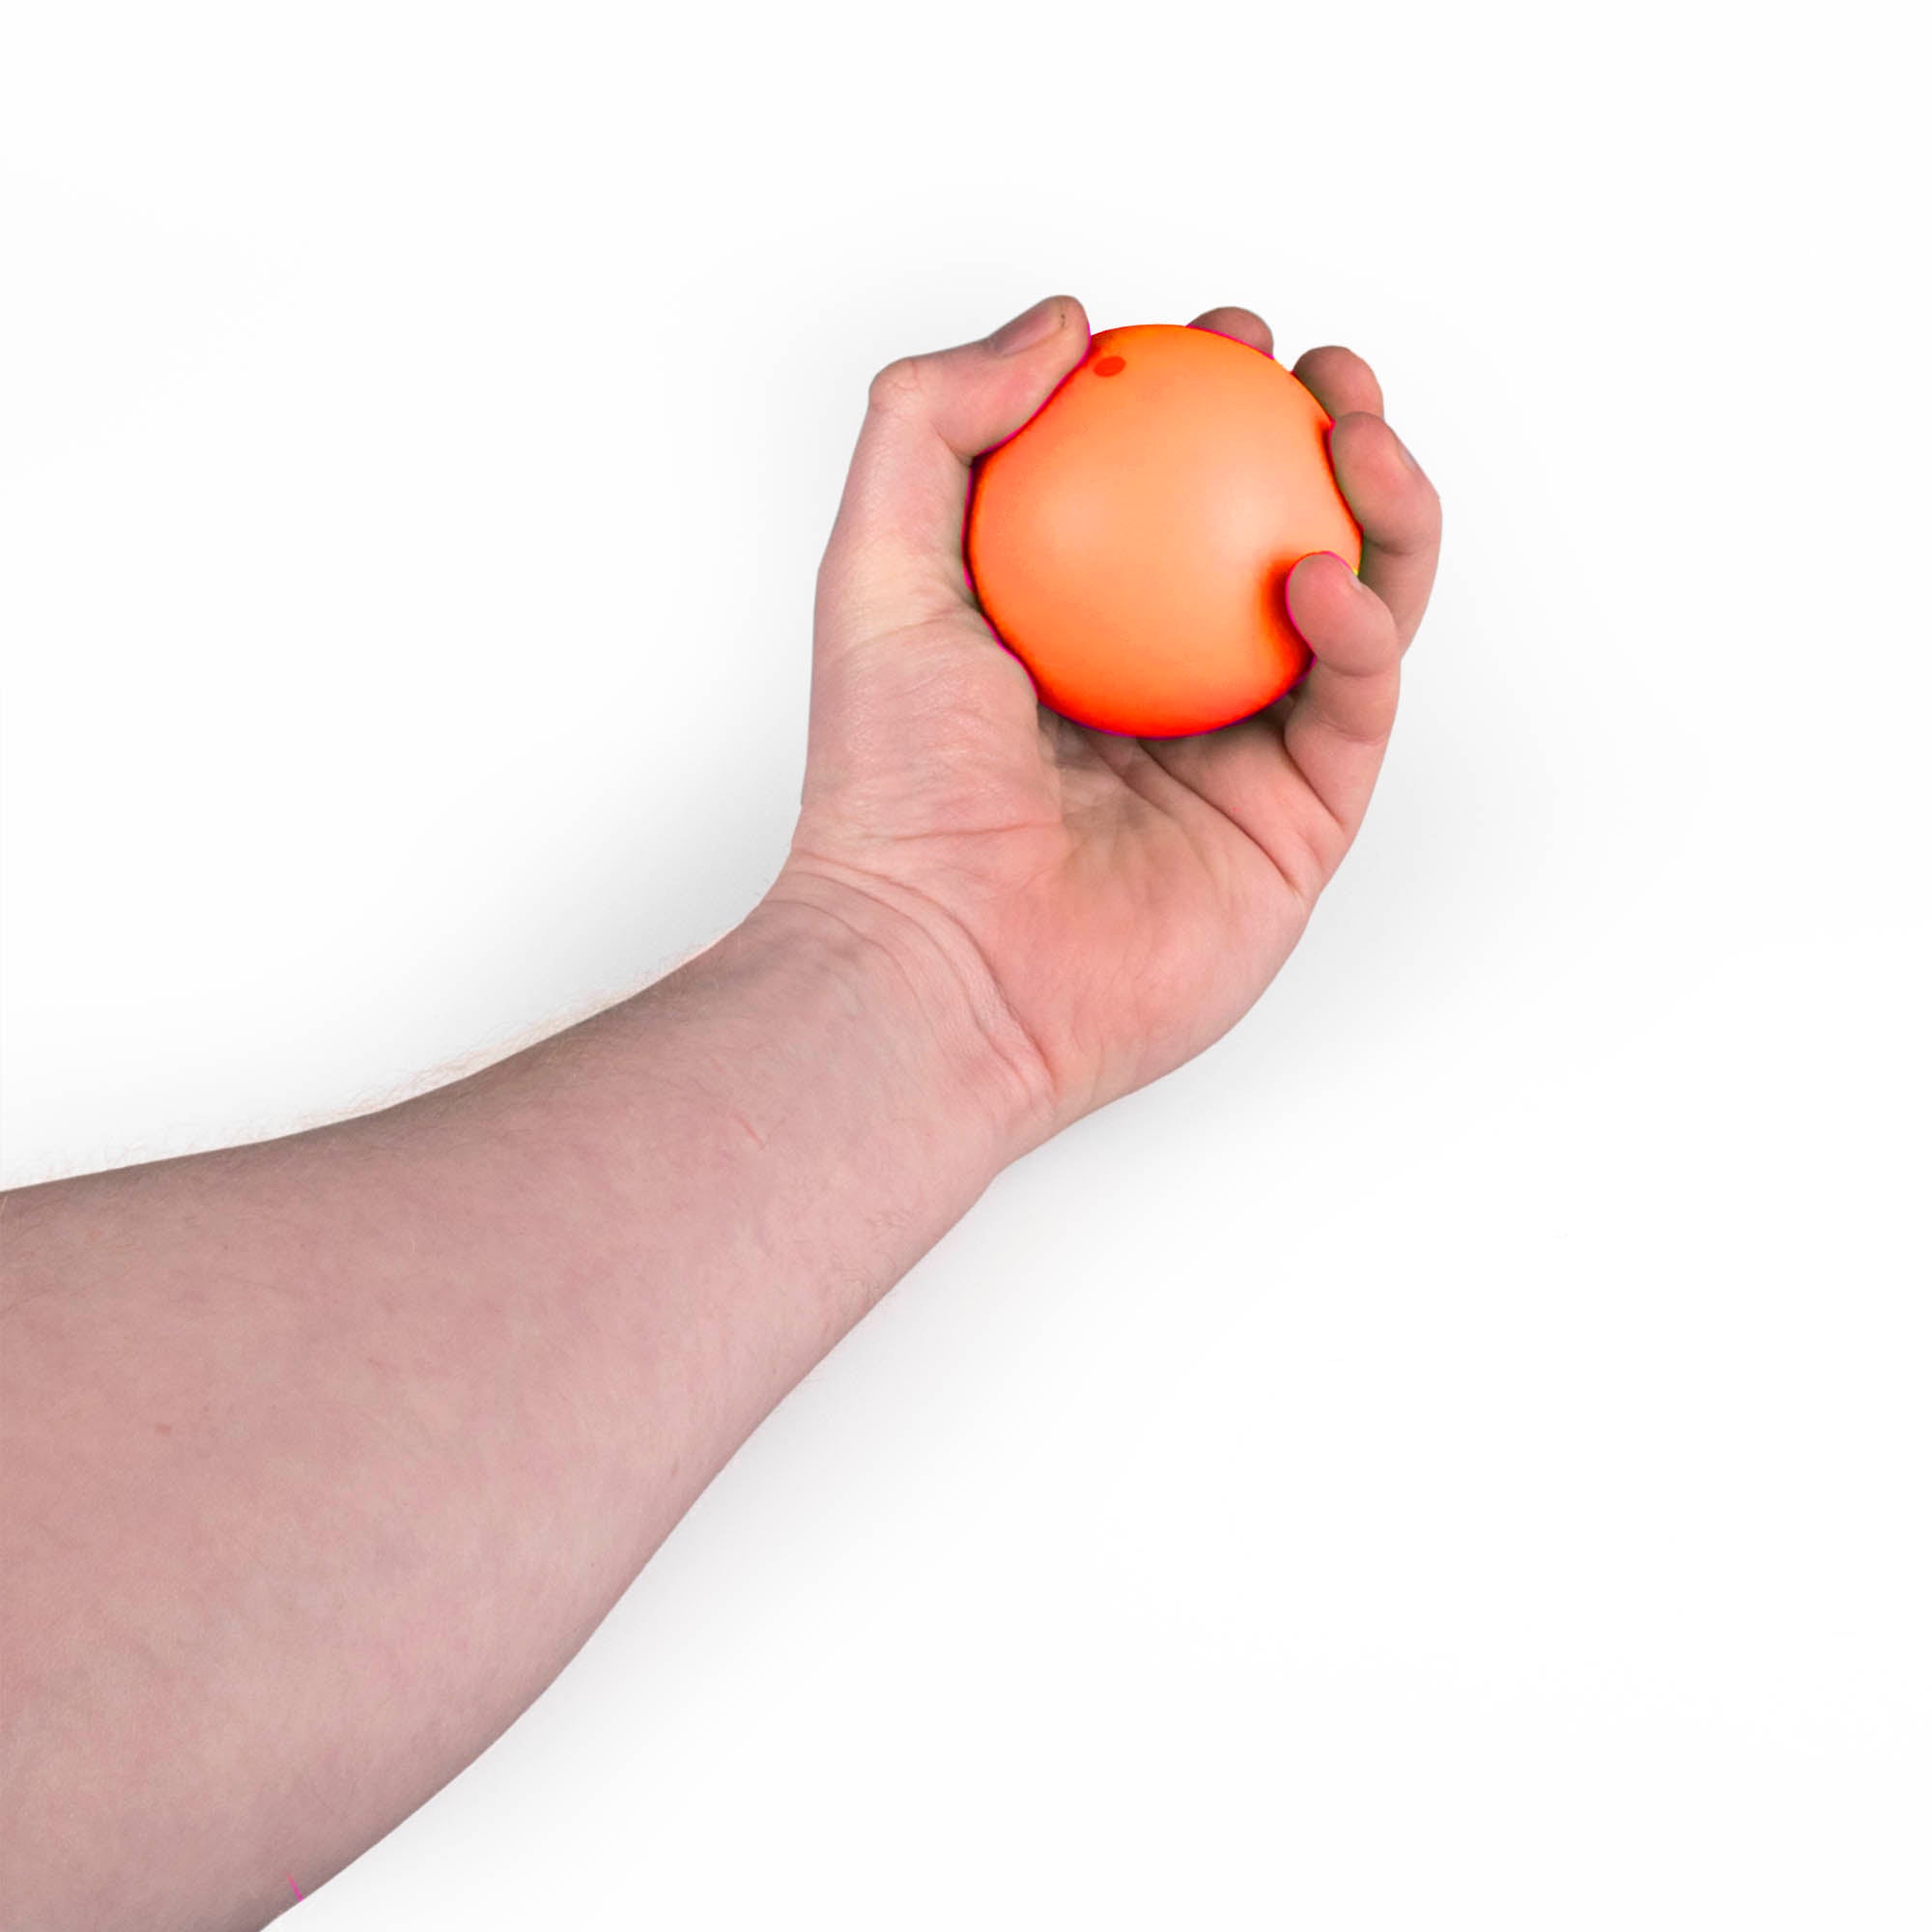 MMX 70mm juggling ball orange in hand